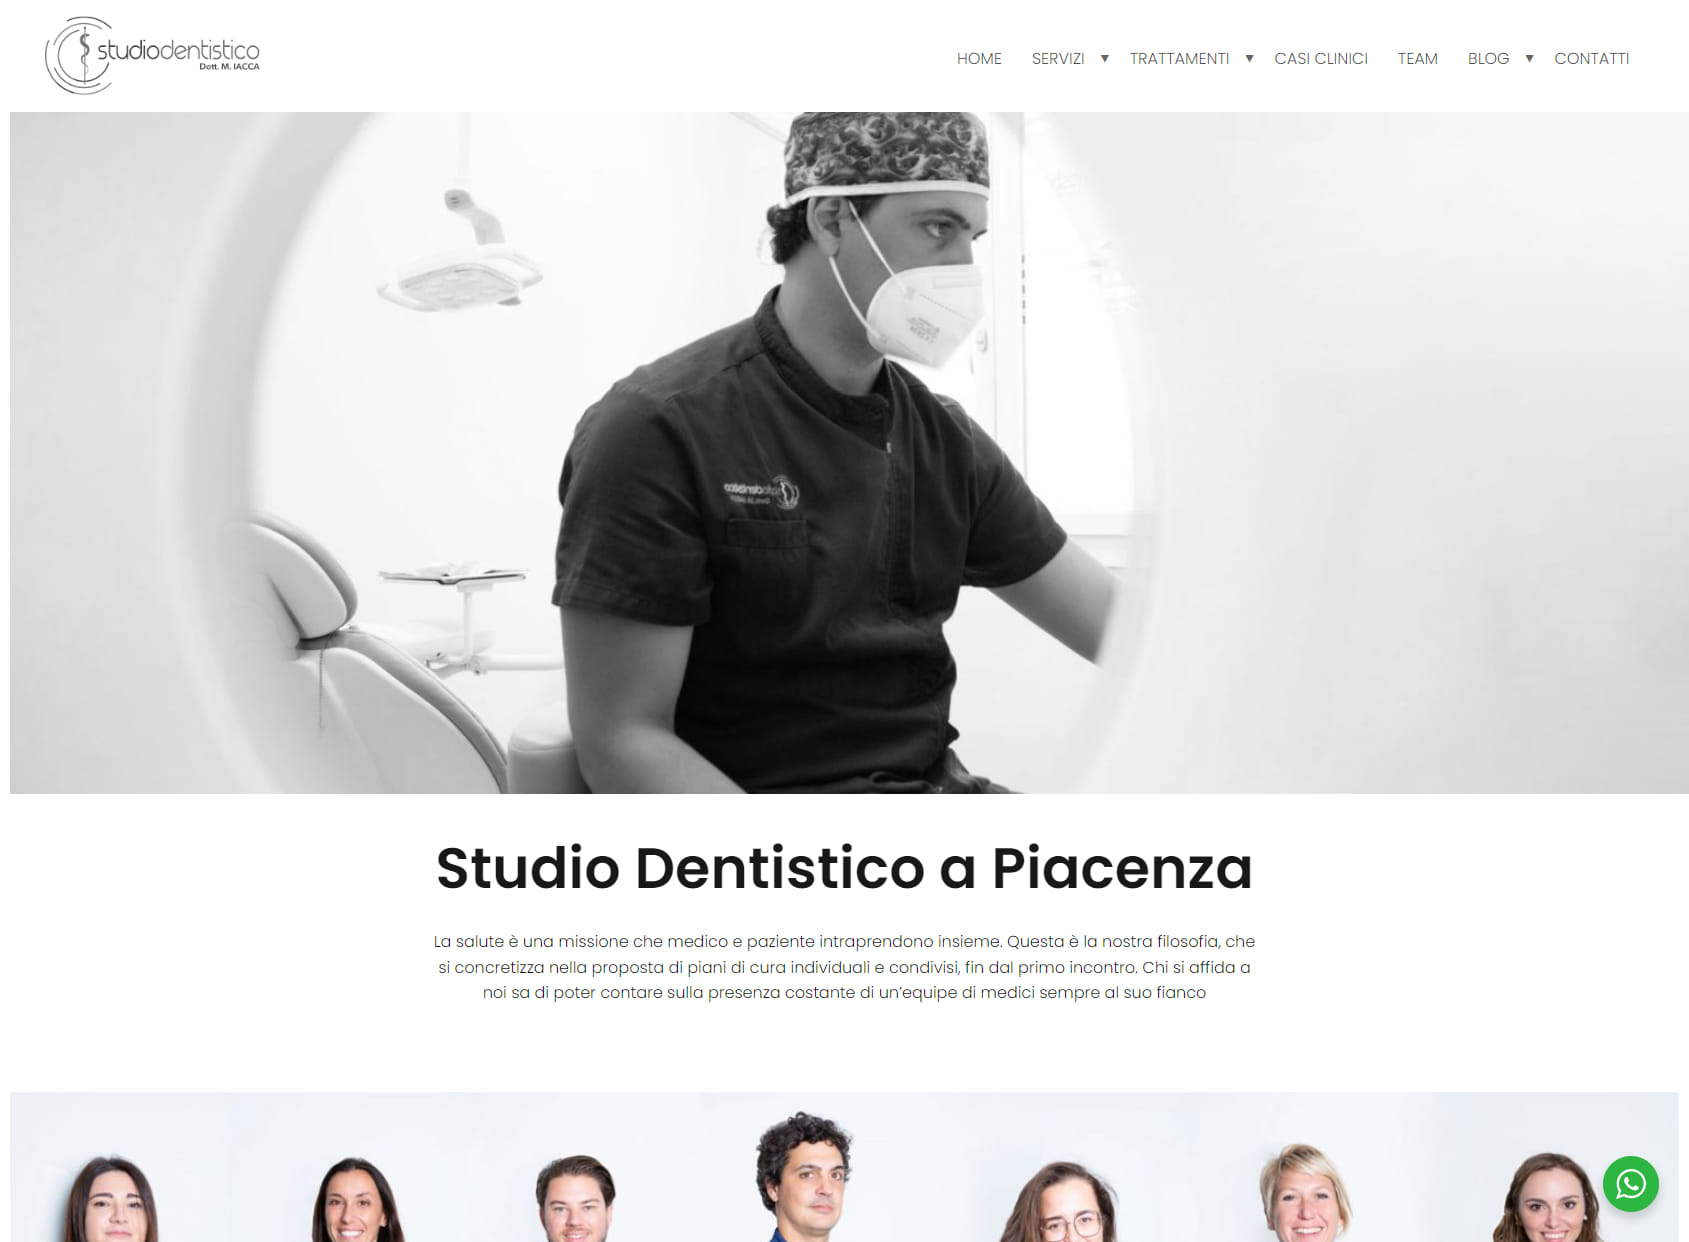 Studio Dentistico Dott. M. Iacca